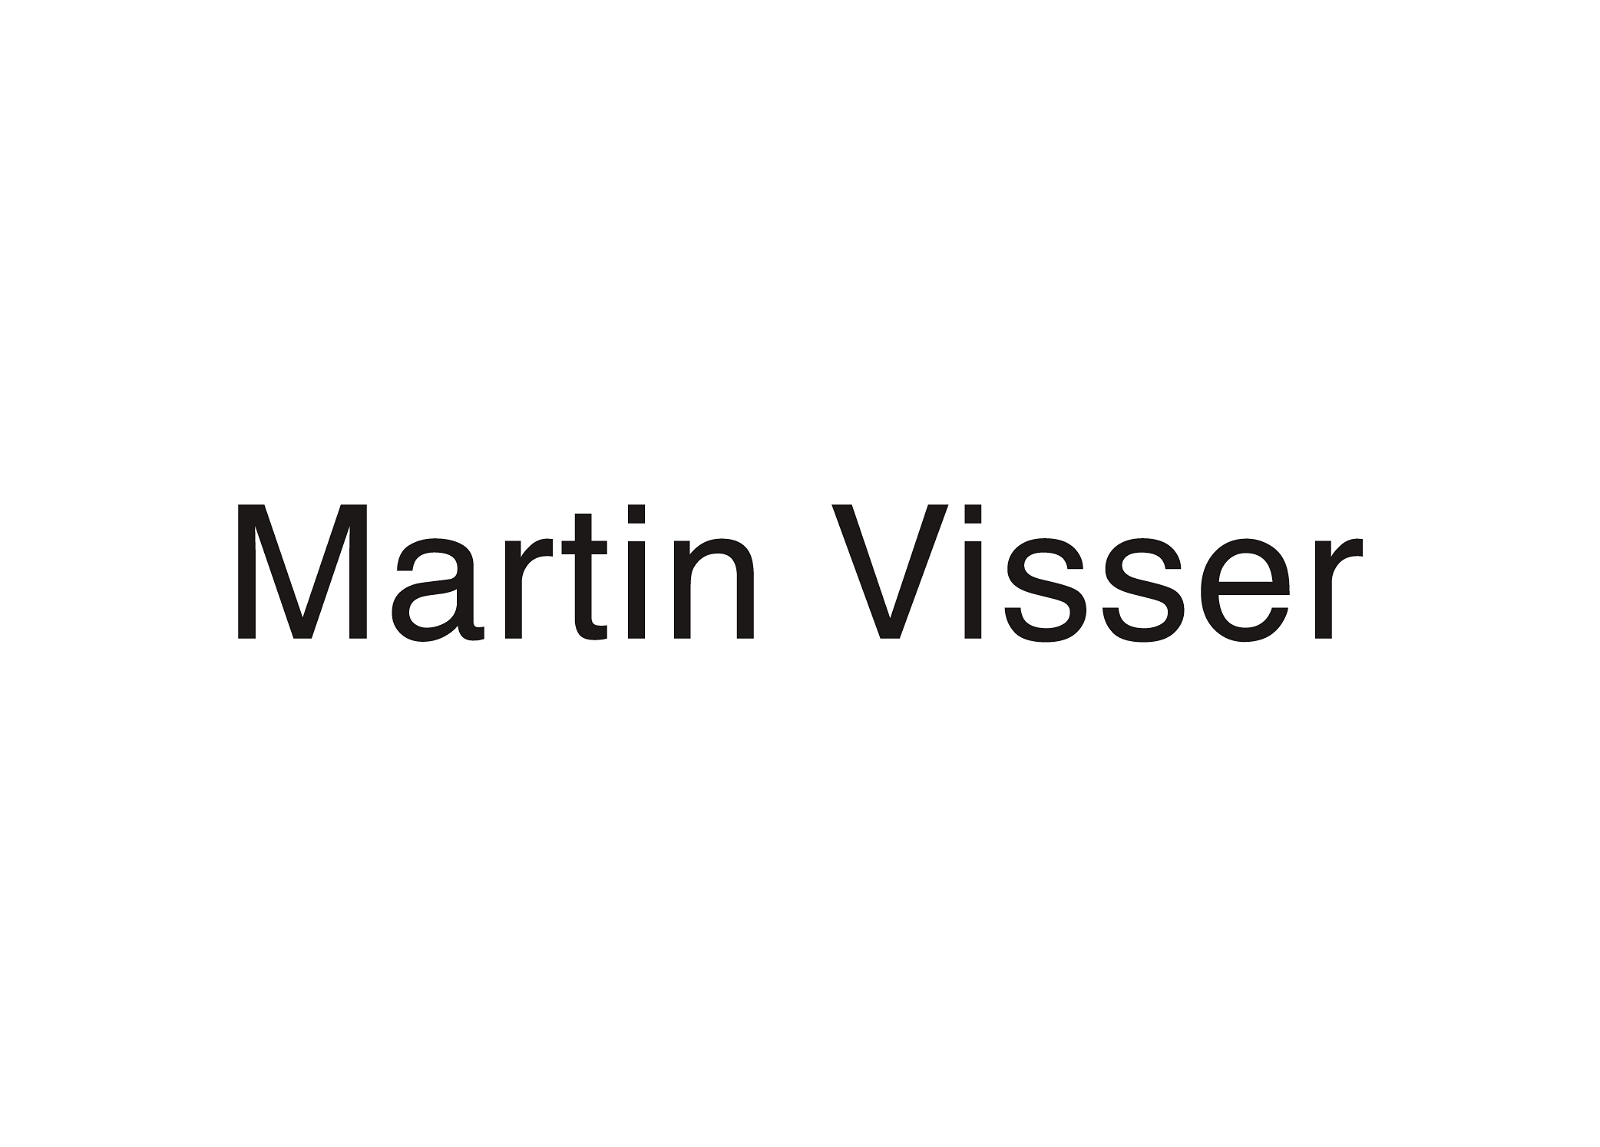 Martin Visser